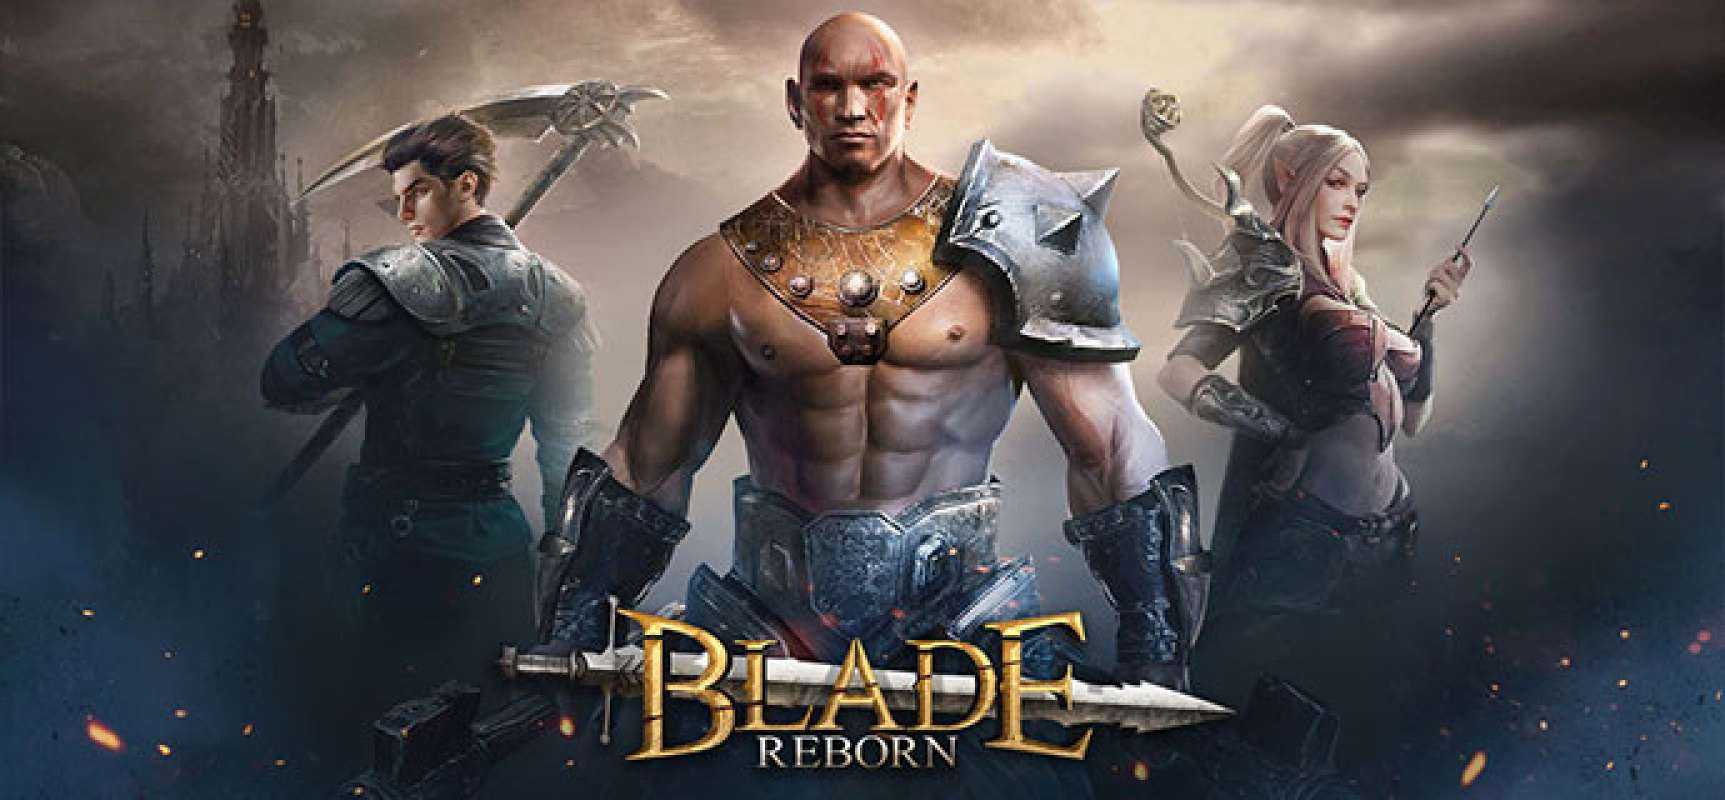 Blade: Reborn